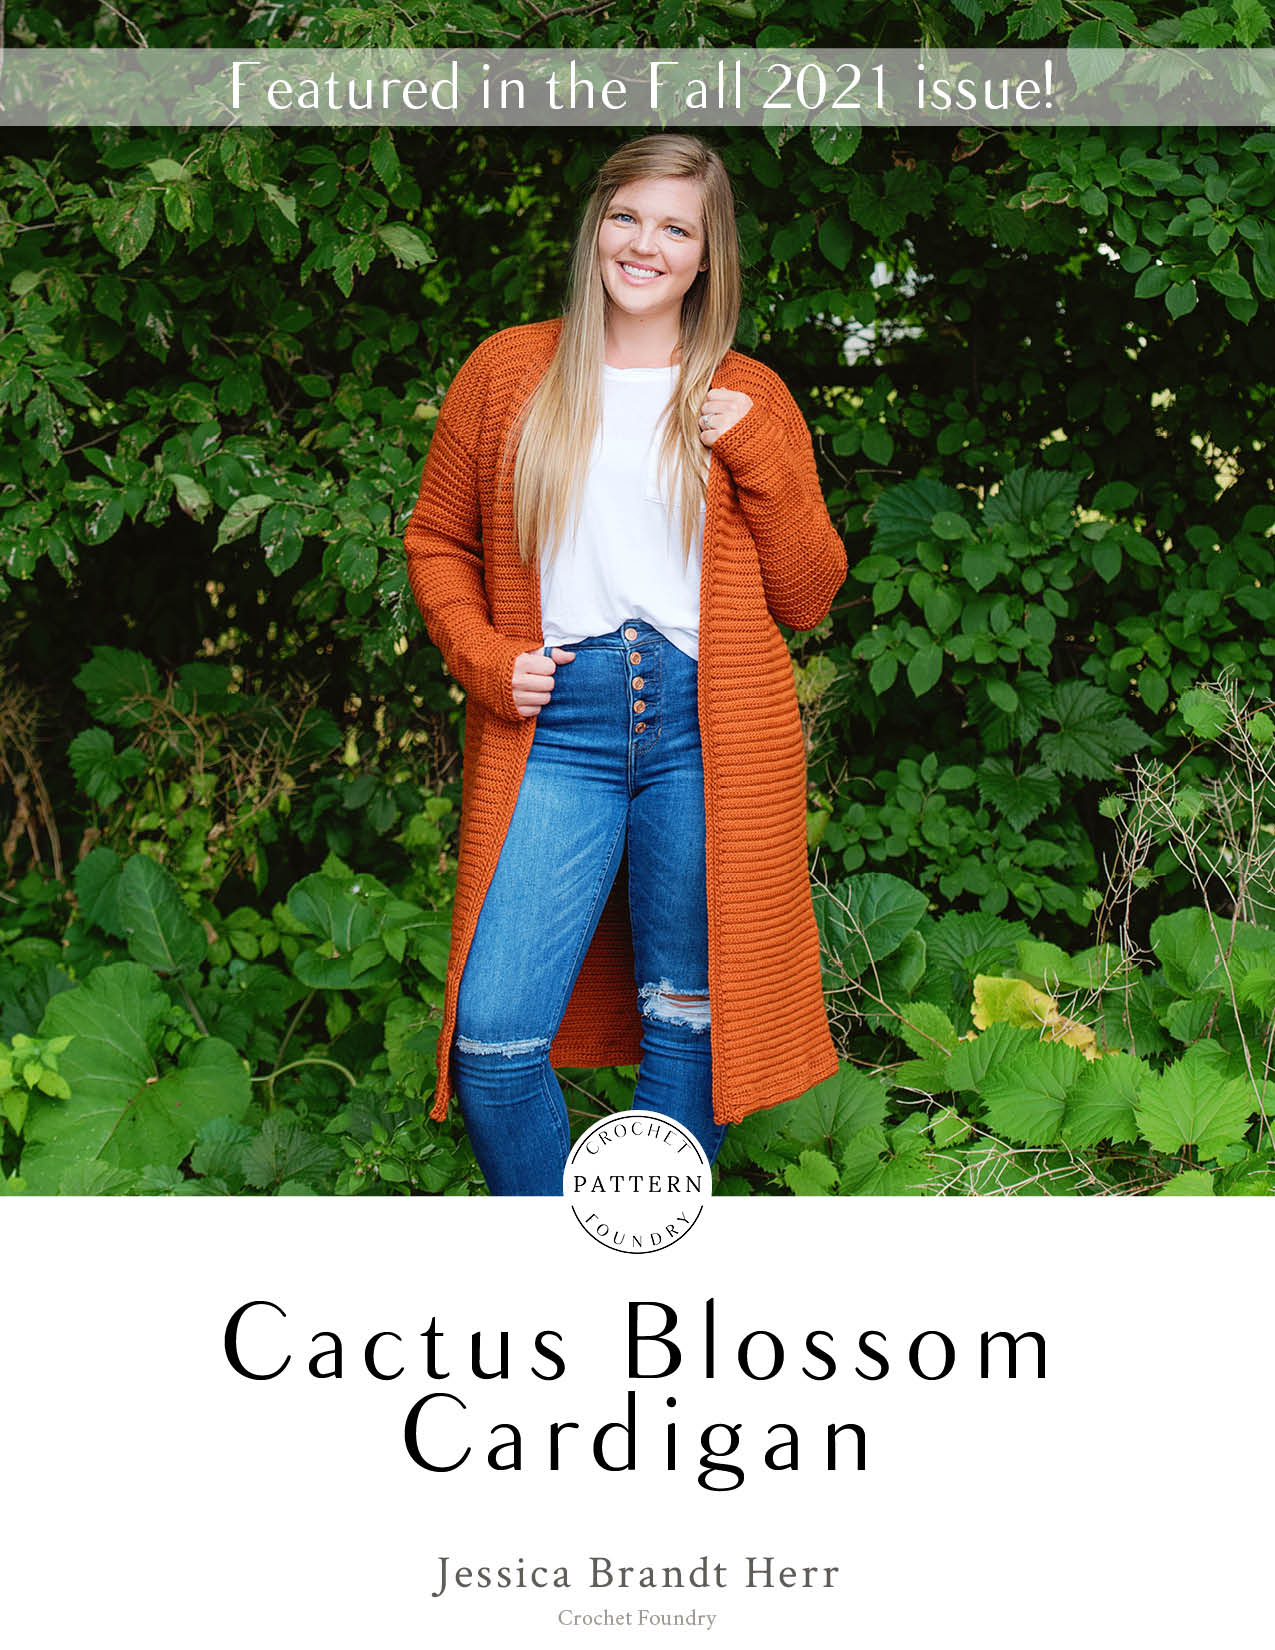 Cactus Blossom Cardigan Crochet PDF Pattern by Jessica Brandt Herr